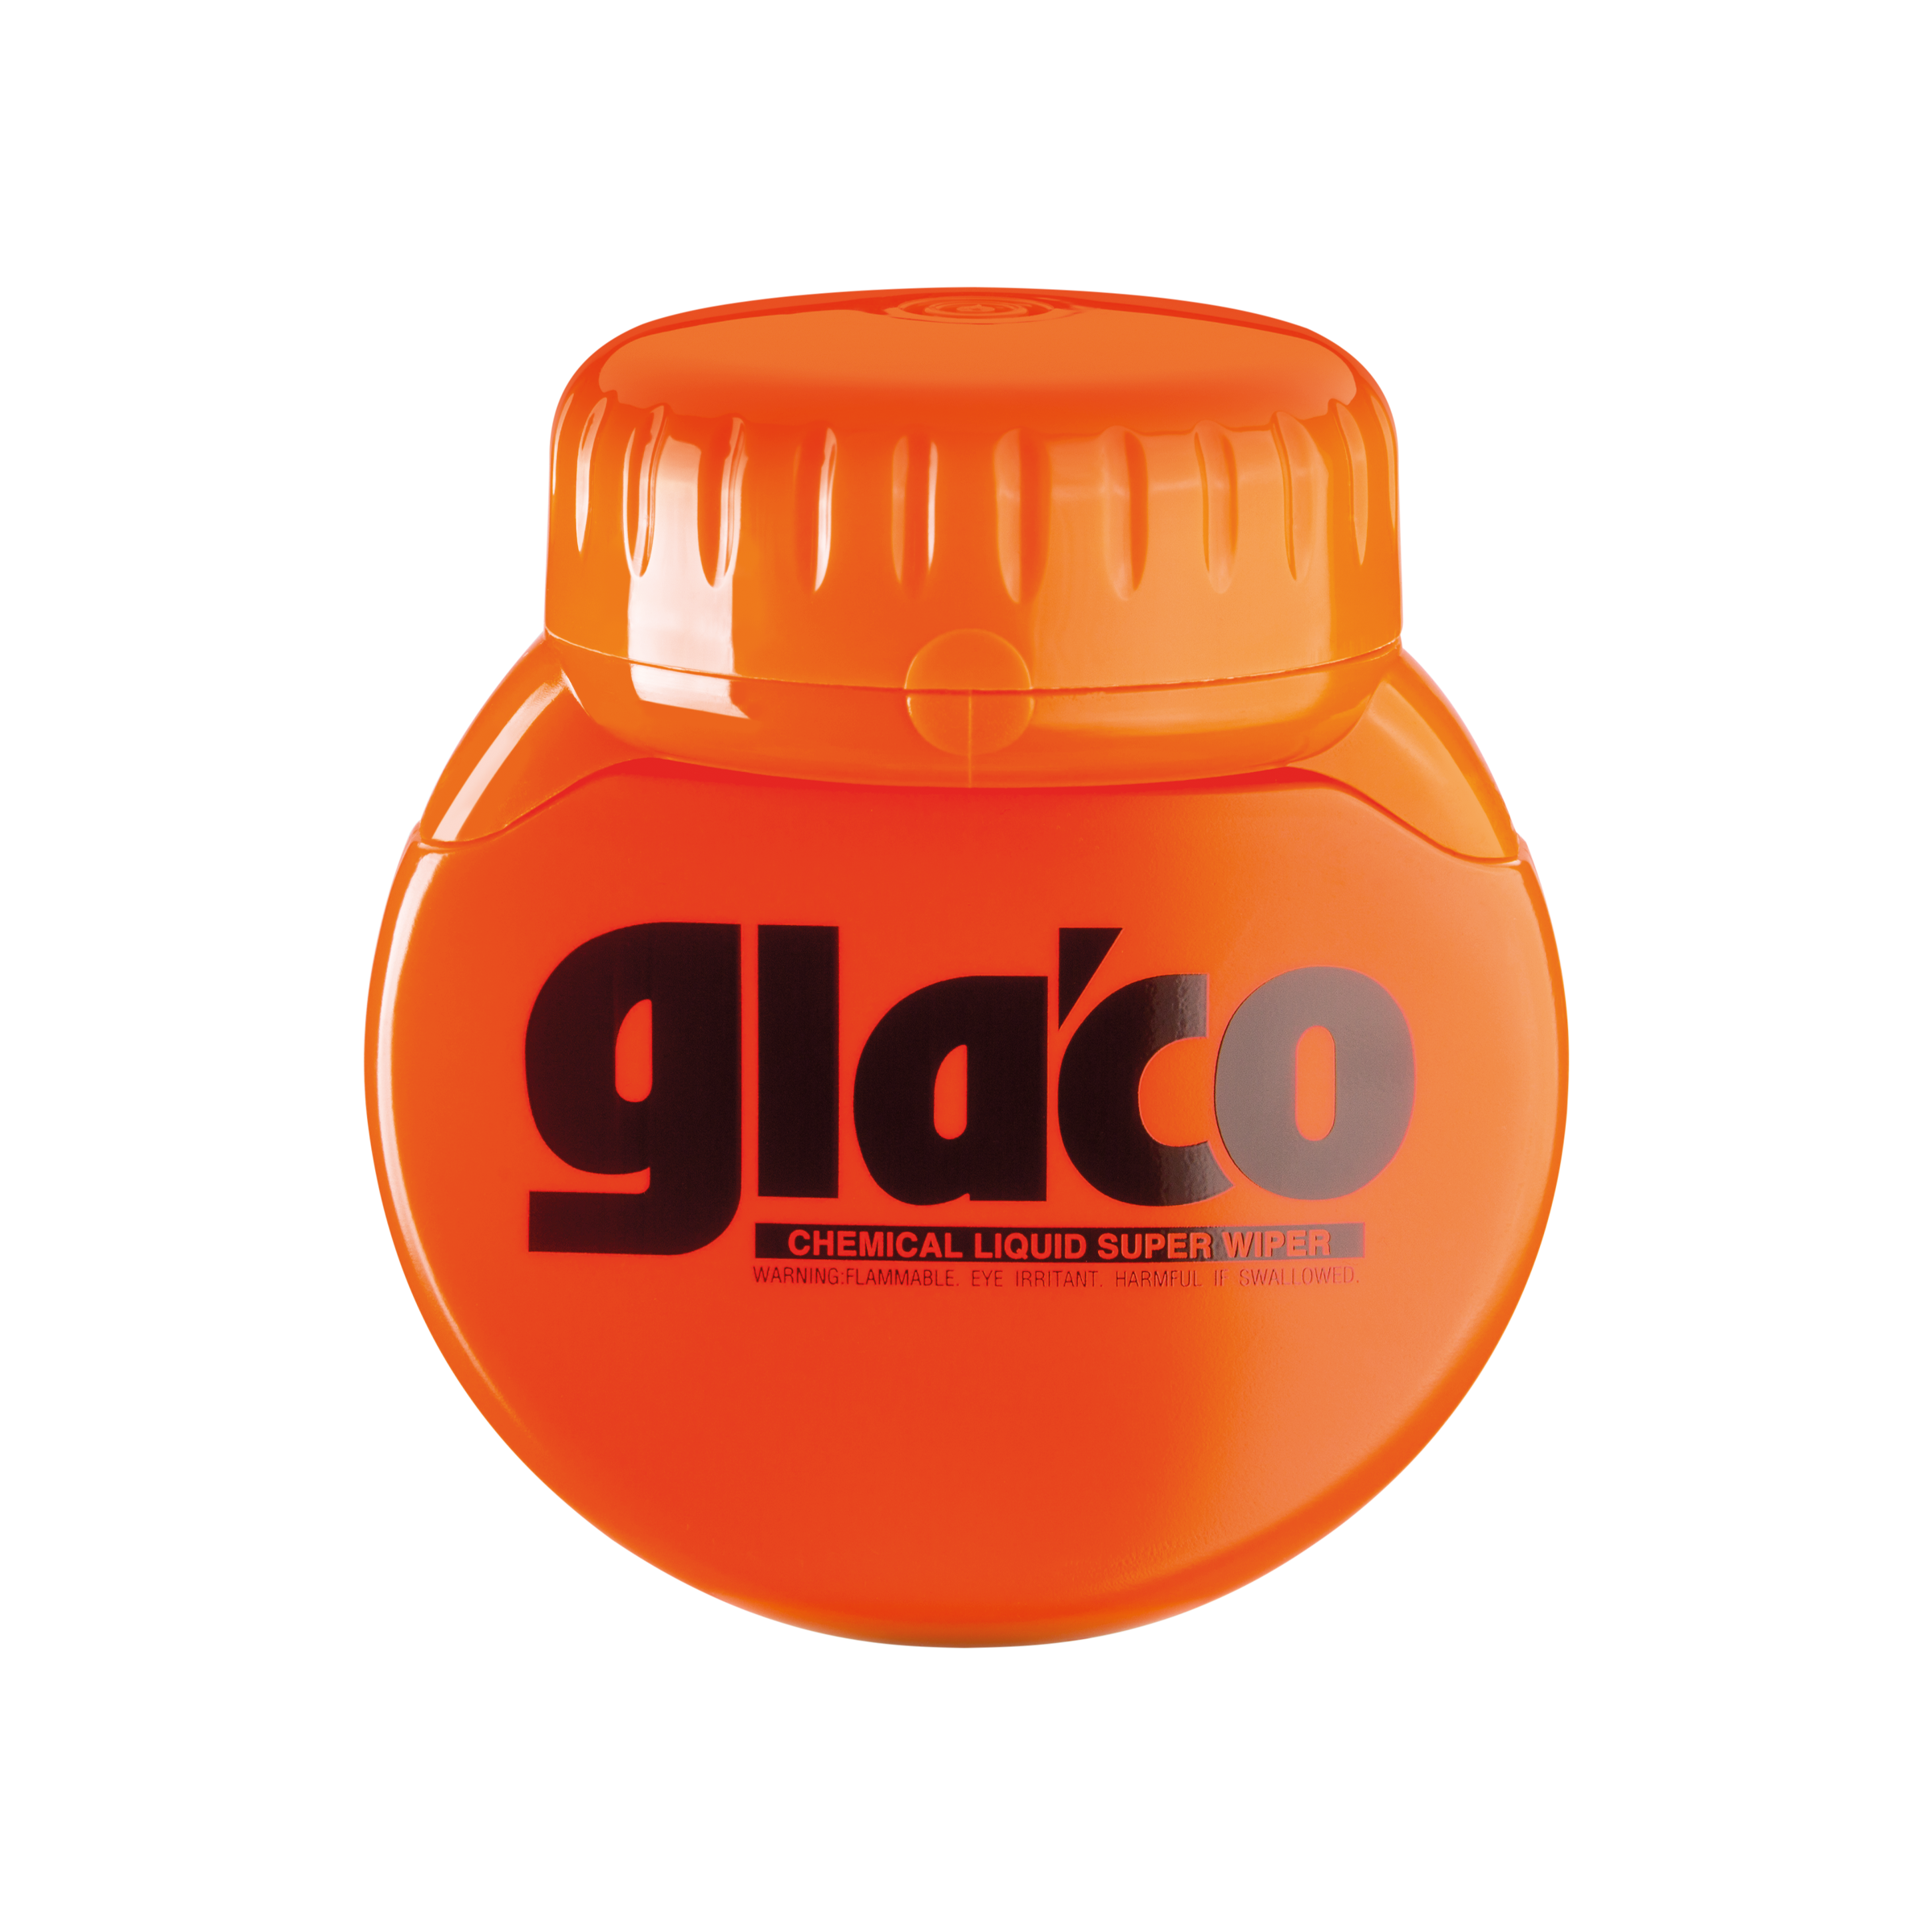  SOFT99 4146 Ultra Glaco Glass Cleaner, 70 ml : Health &  Household